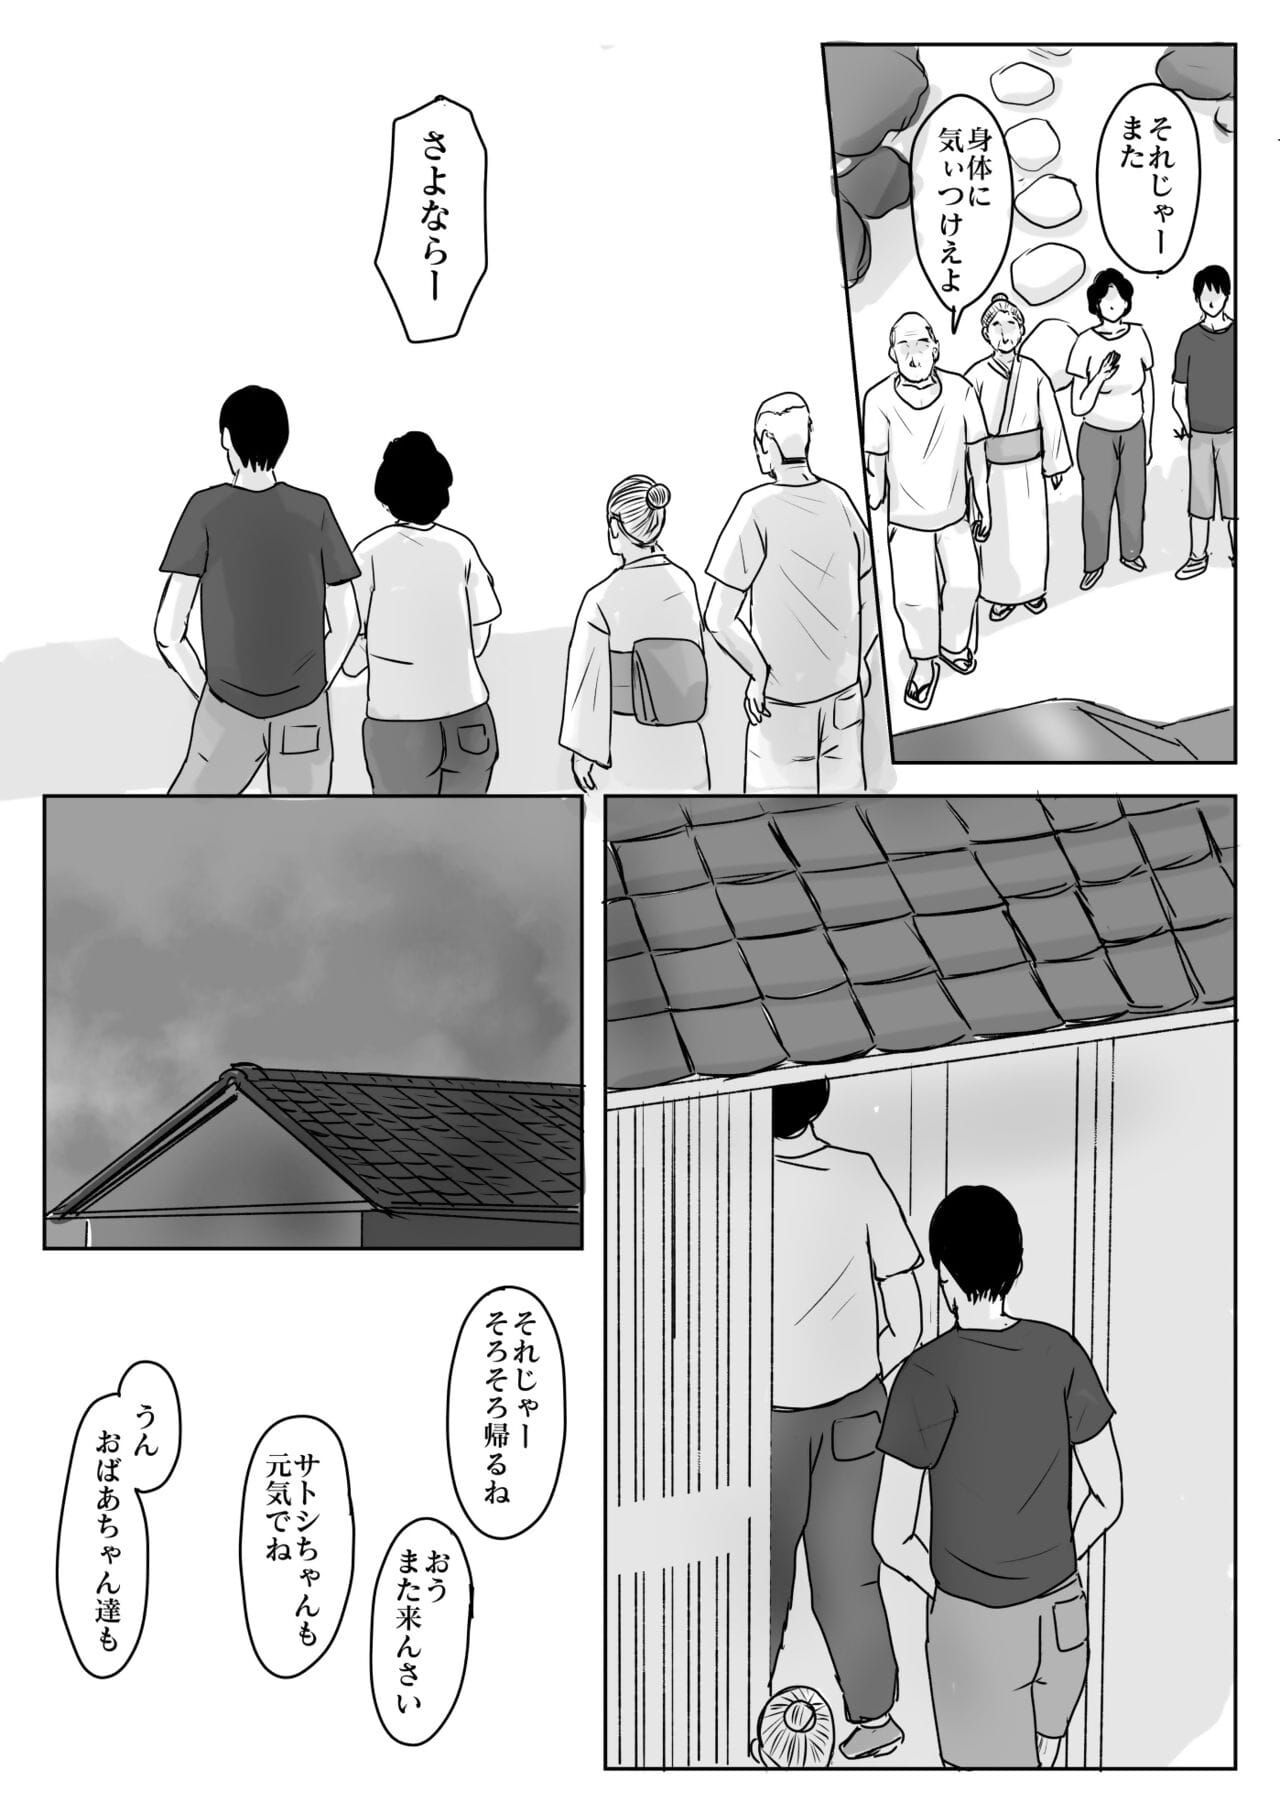 哈哈 ni koishite #3 思出 没有 夏 page 1